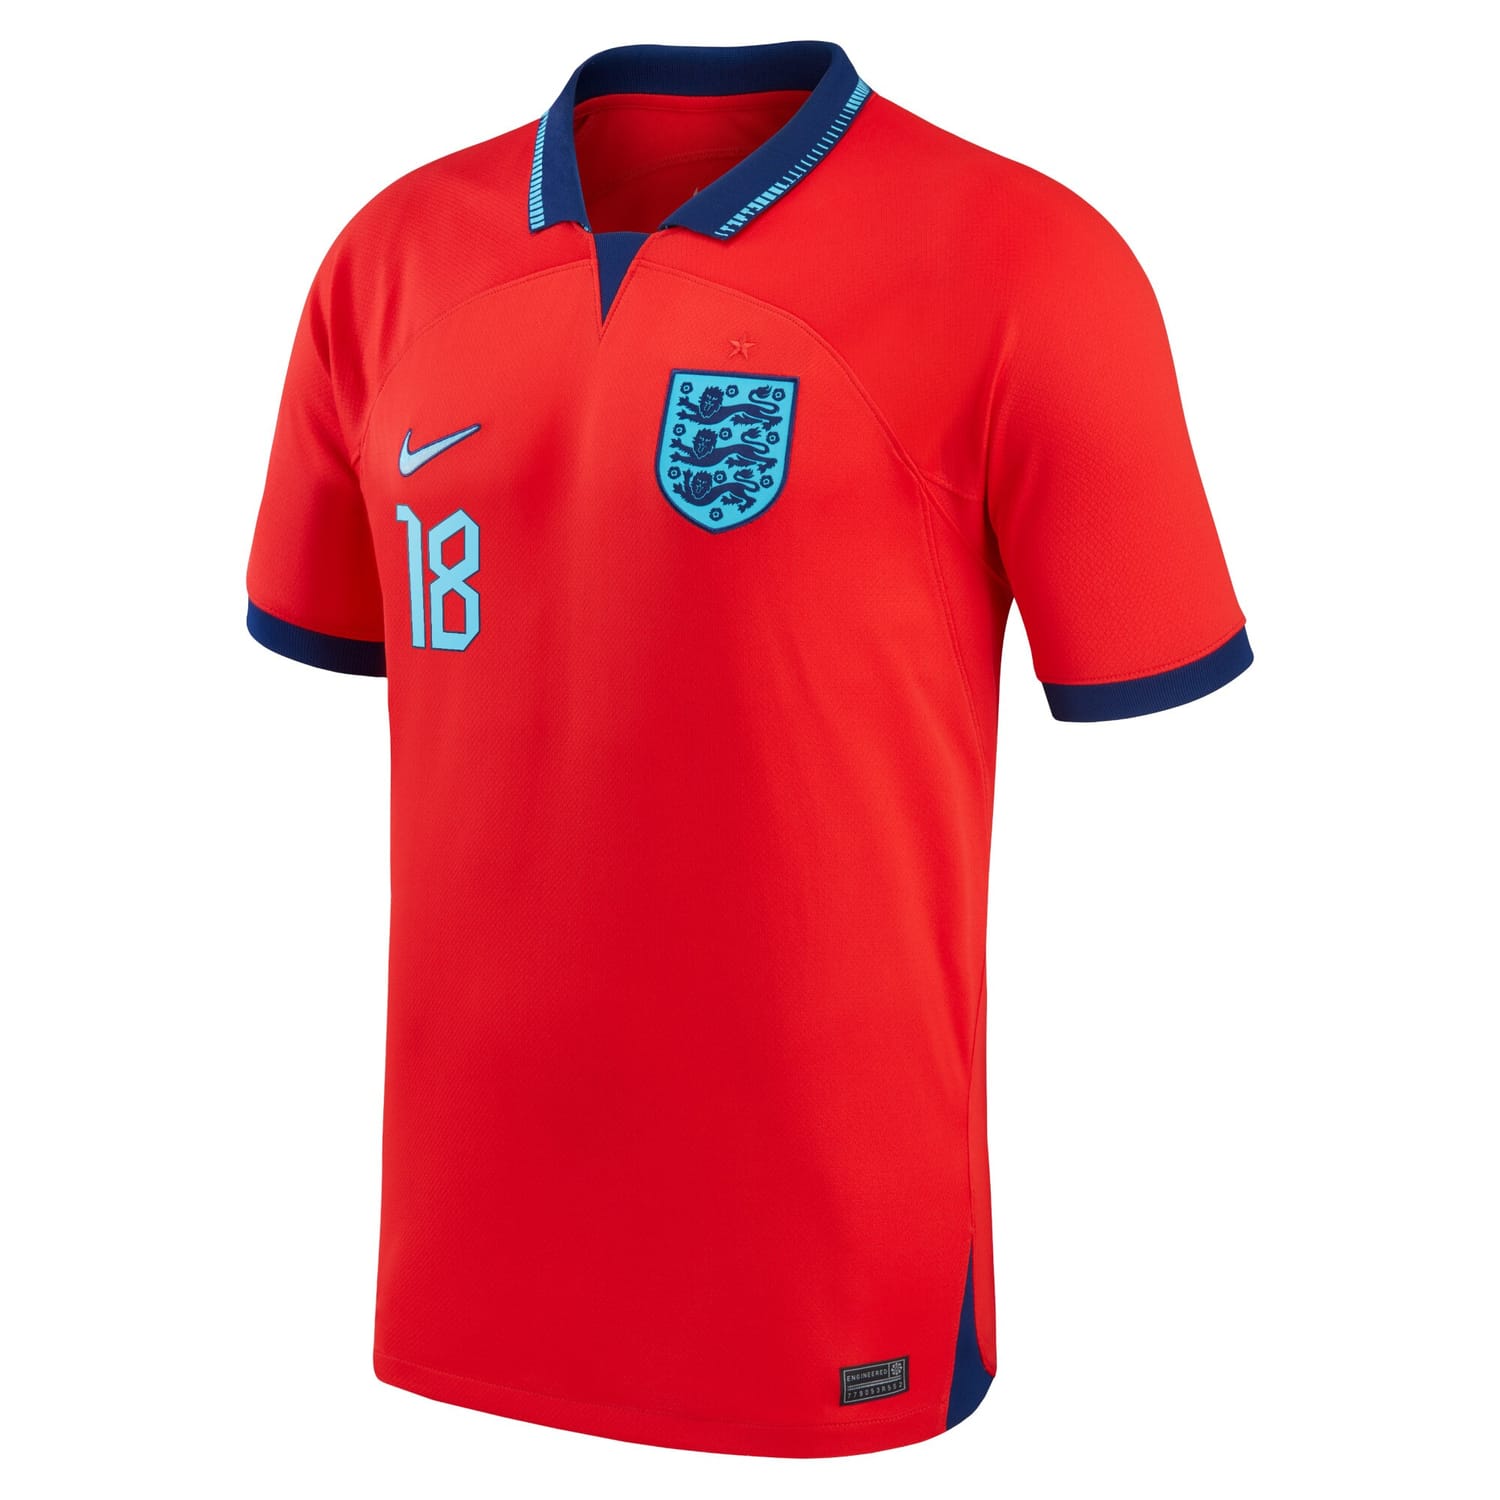 England National Team Away Jersey Shirt 2022 player Trent Alexander-Arnold 18 printing for Men